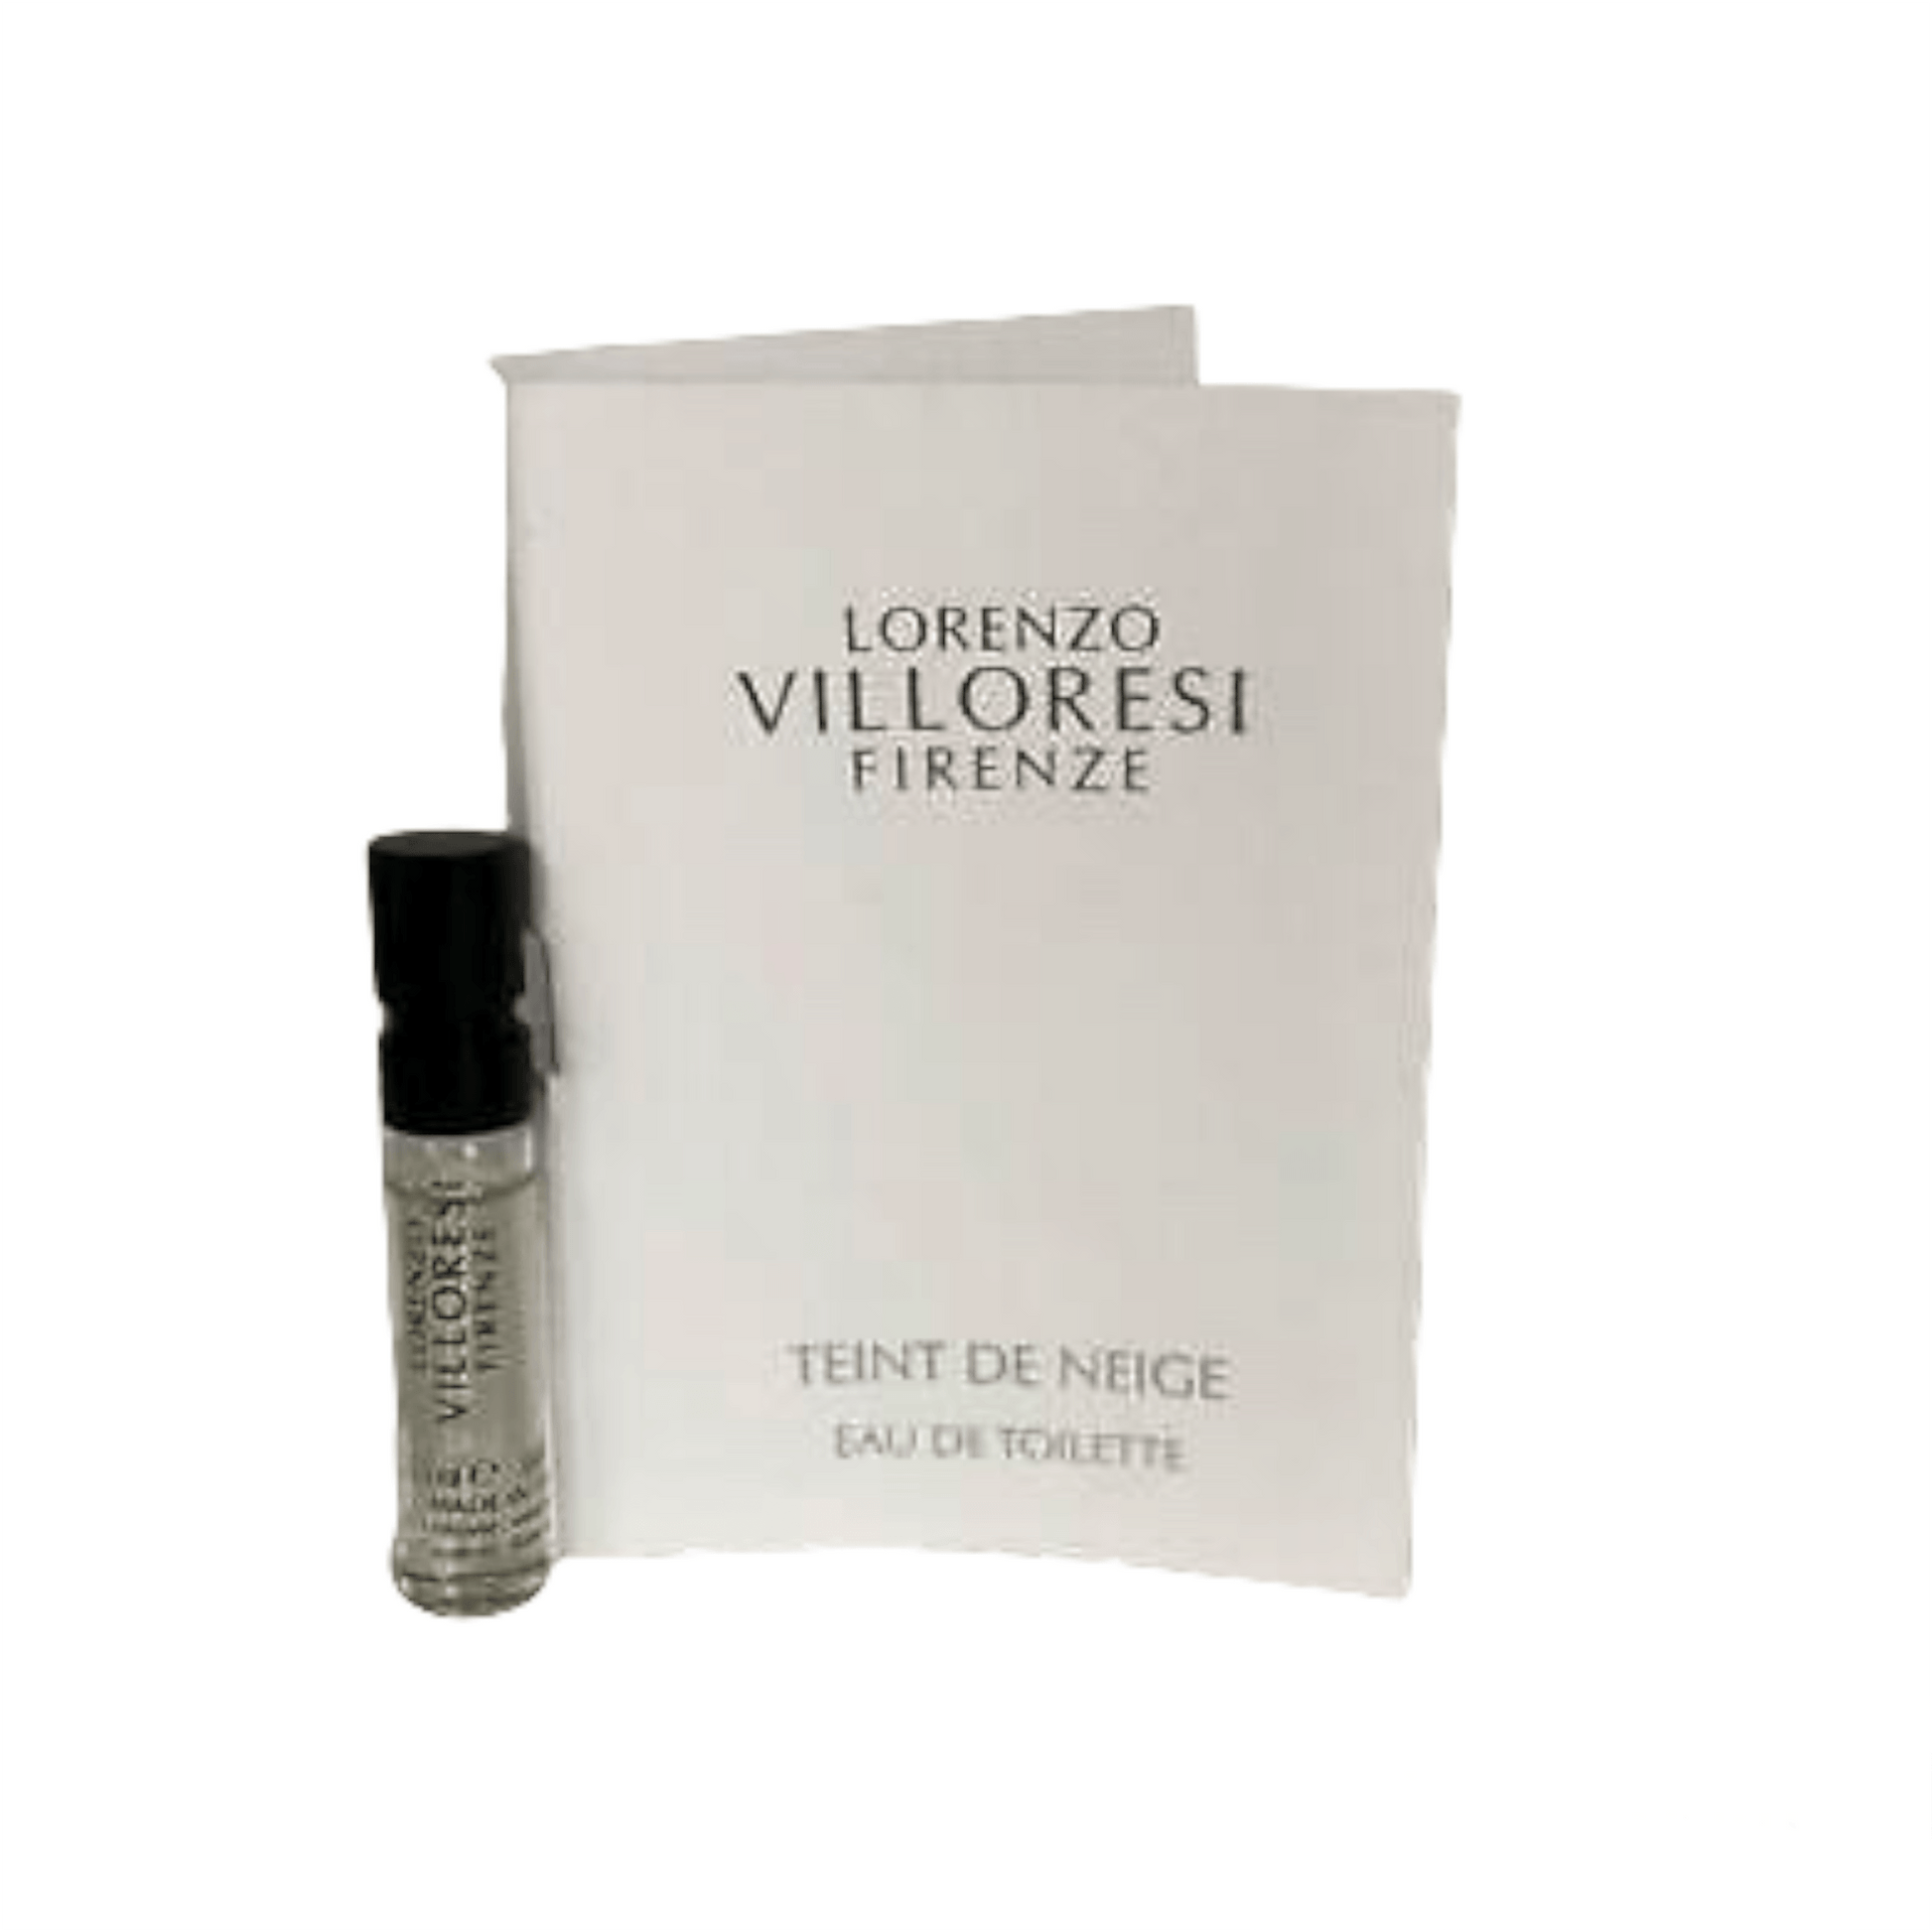 Lorenzo Villoresi Firenze Teint de Neige eșantion oficial de parfum 2ml 0.06 fl. oz